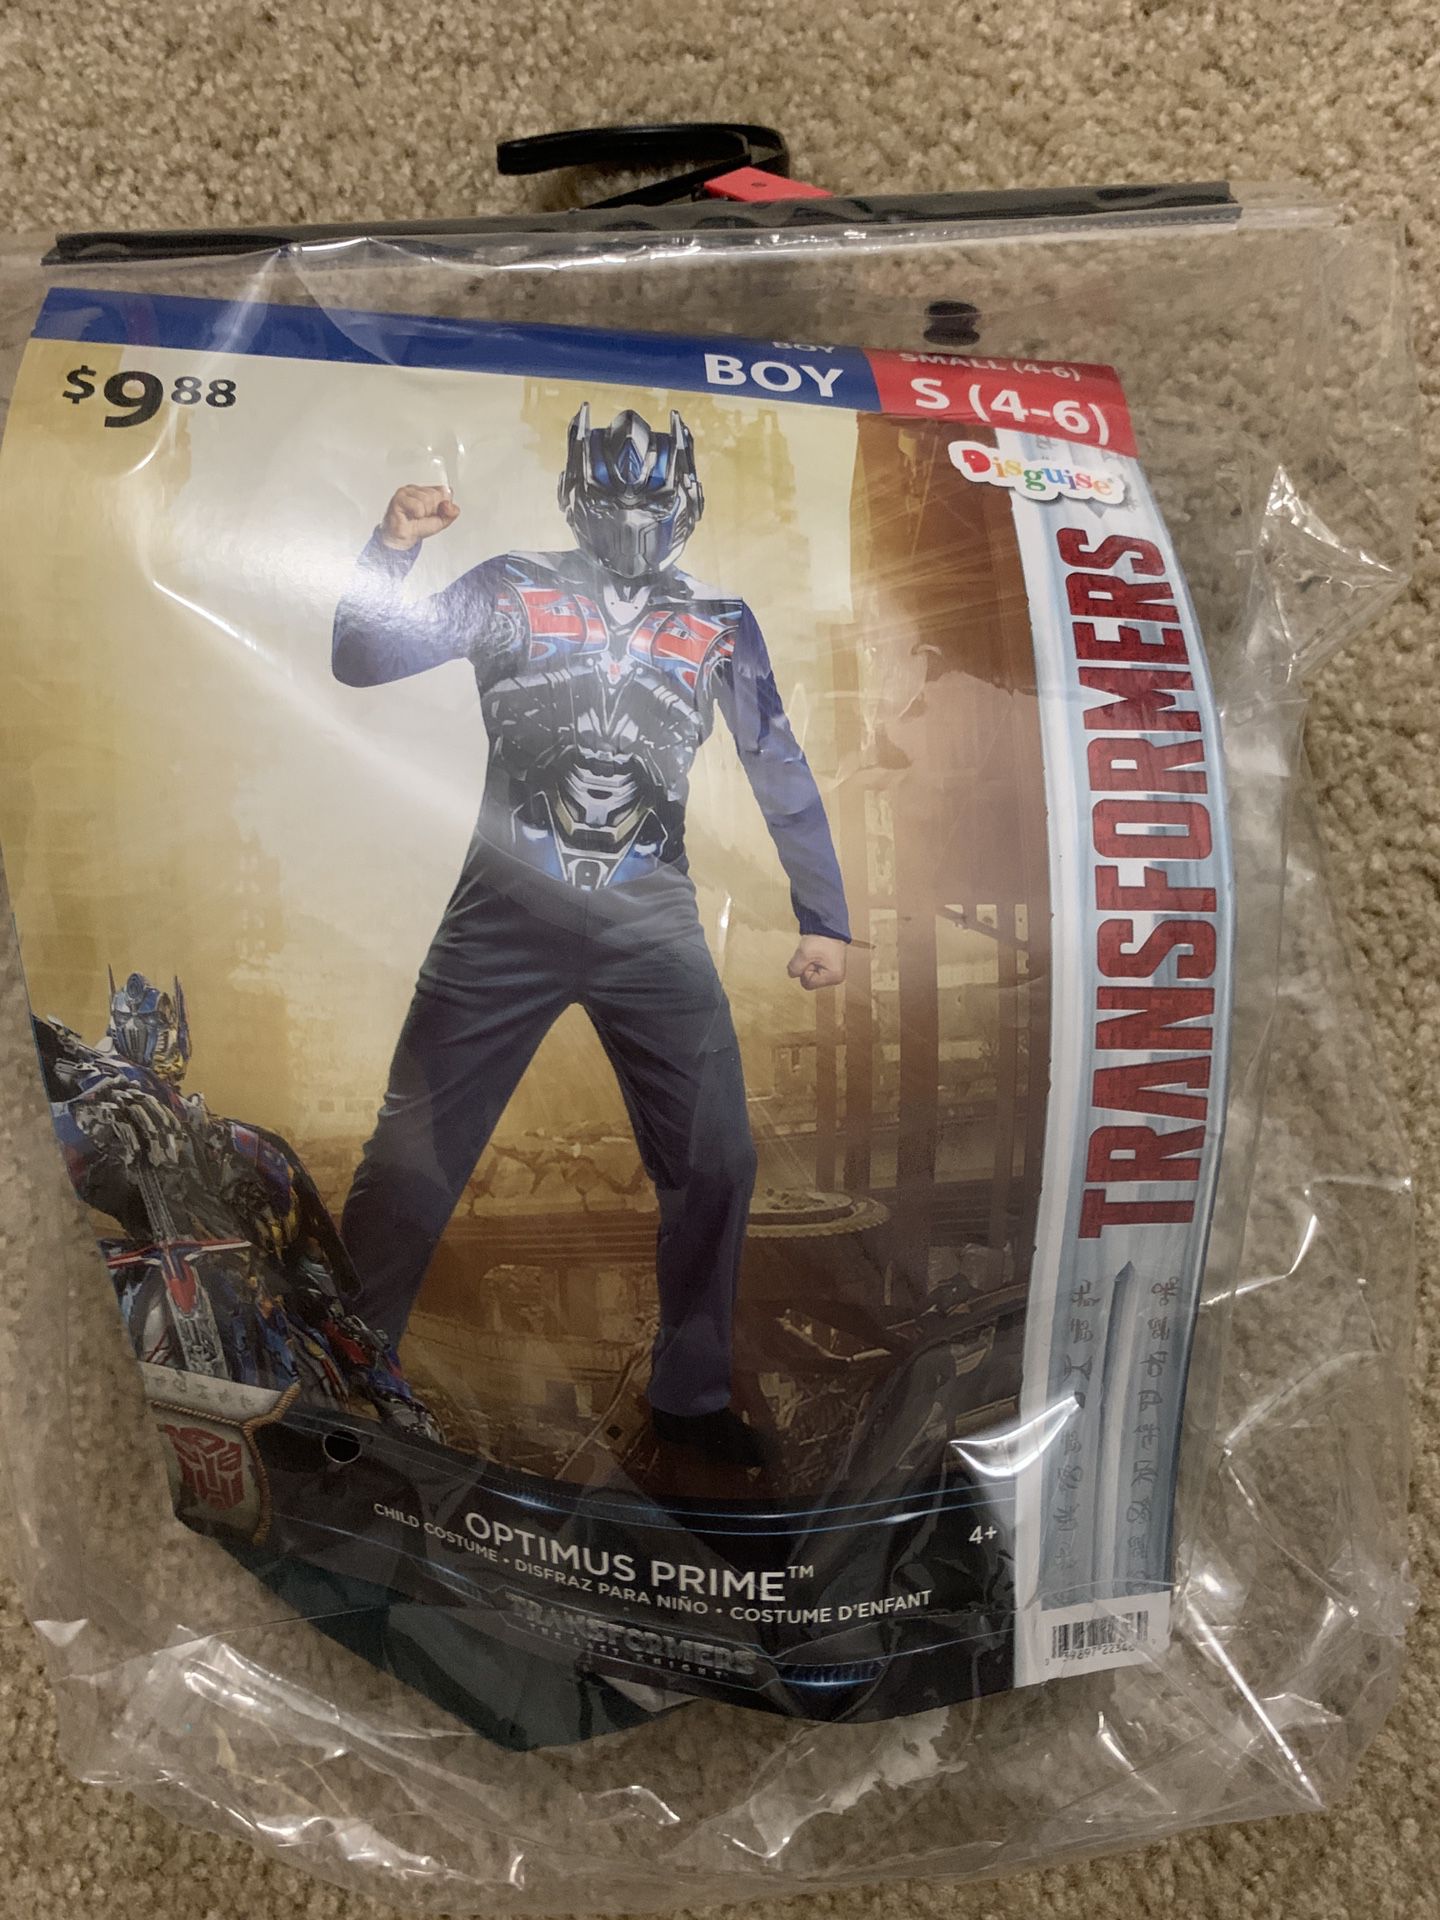 Transformers Halloween Costume- 5$